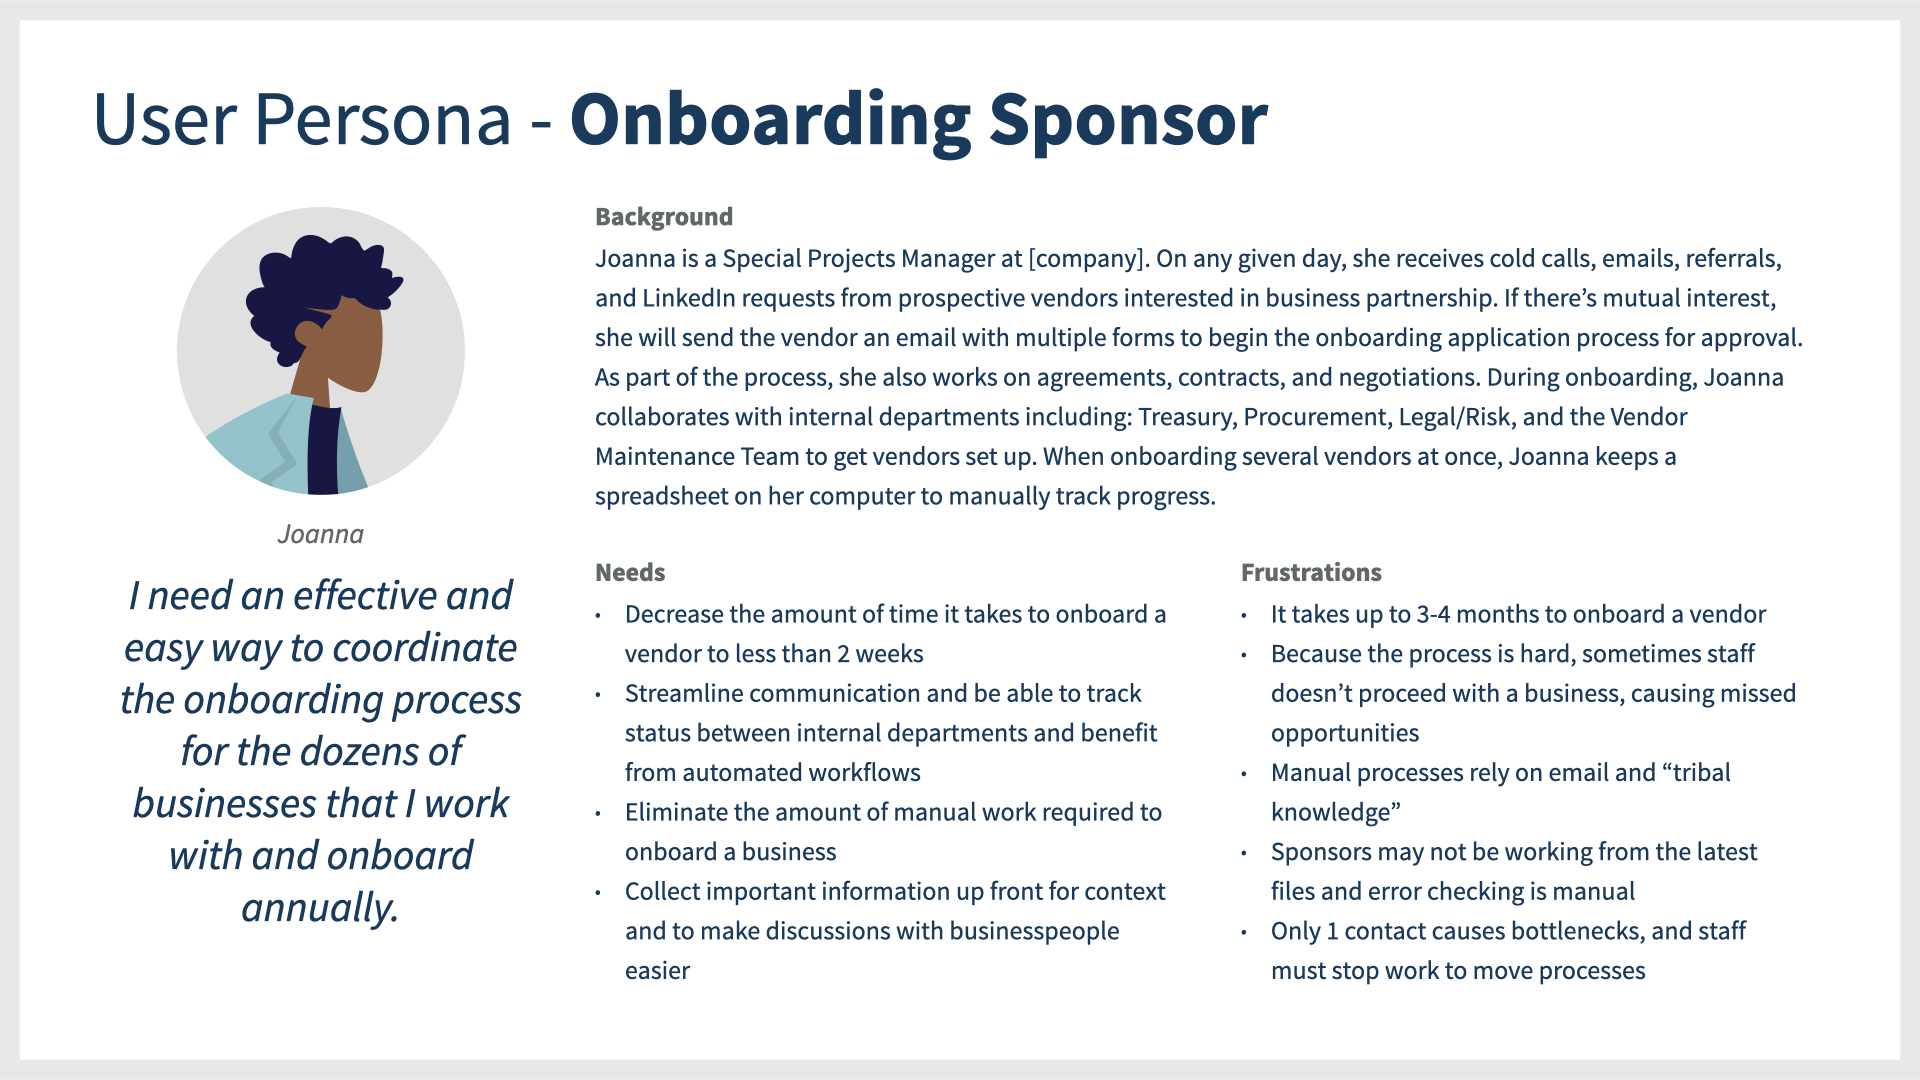 User persona for onboarding sponsor